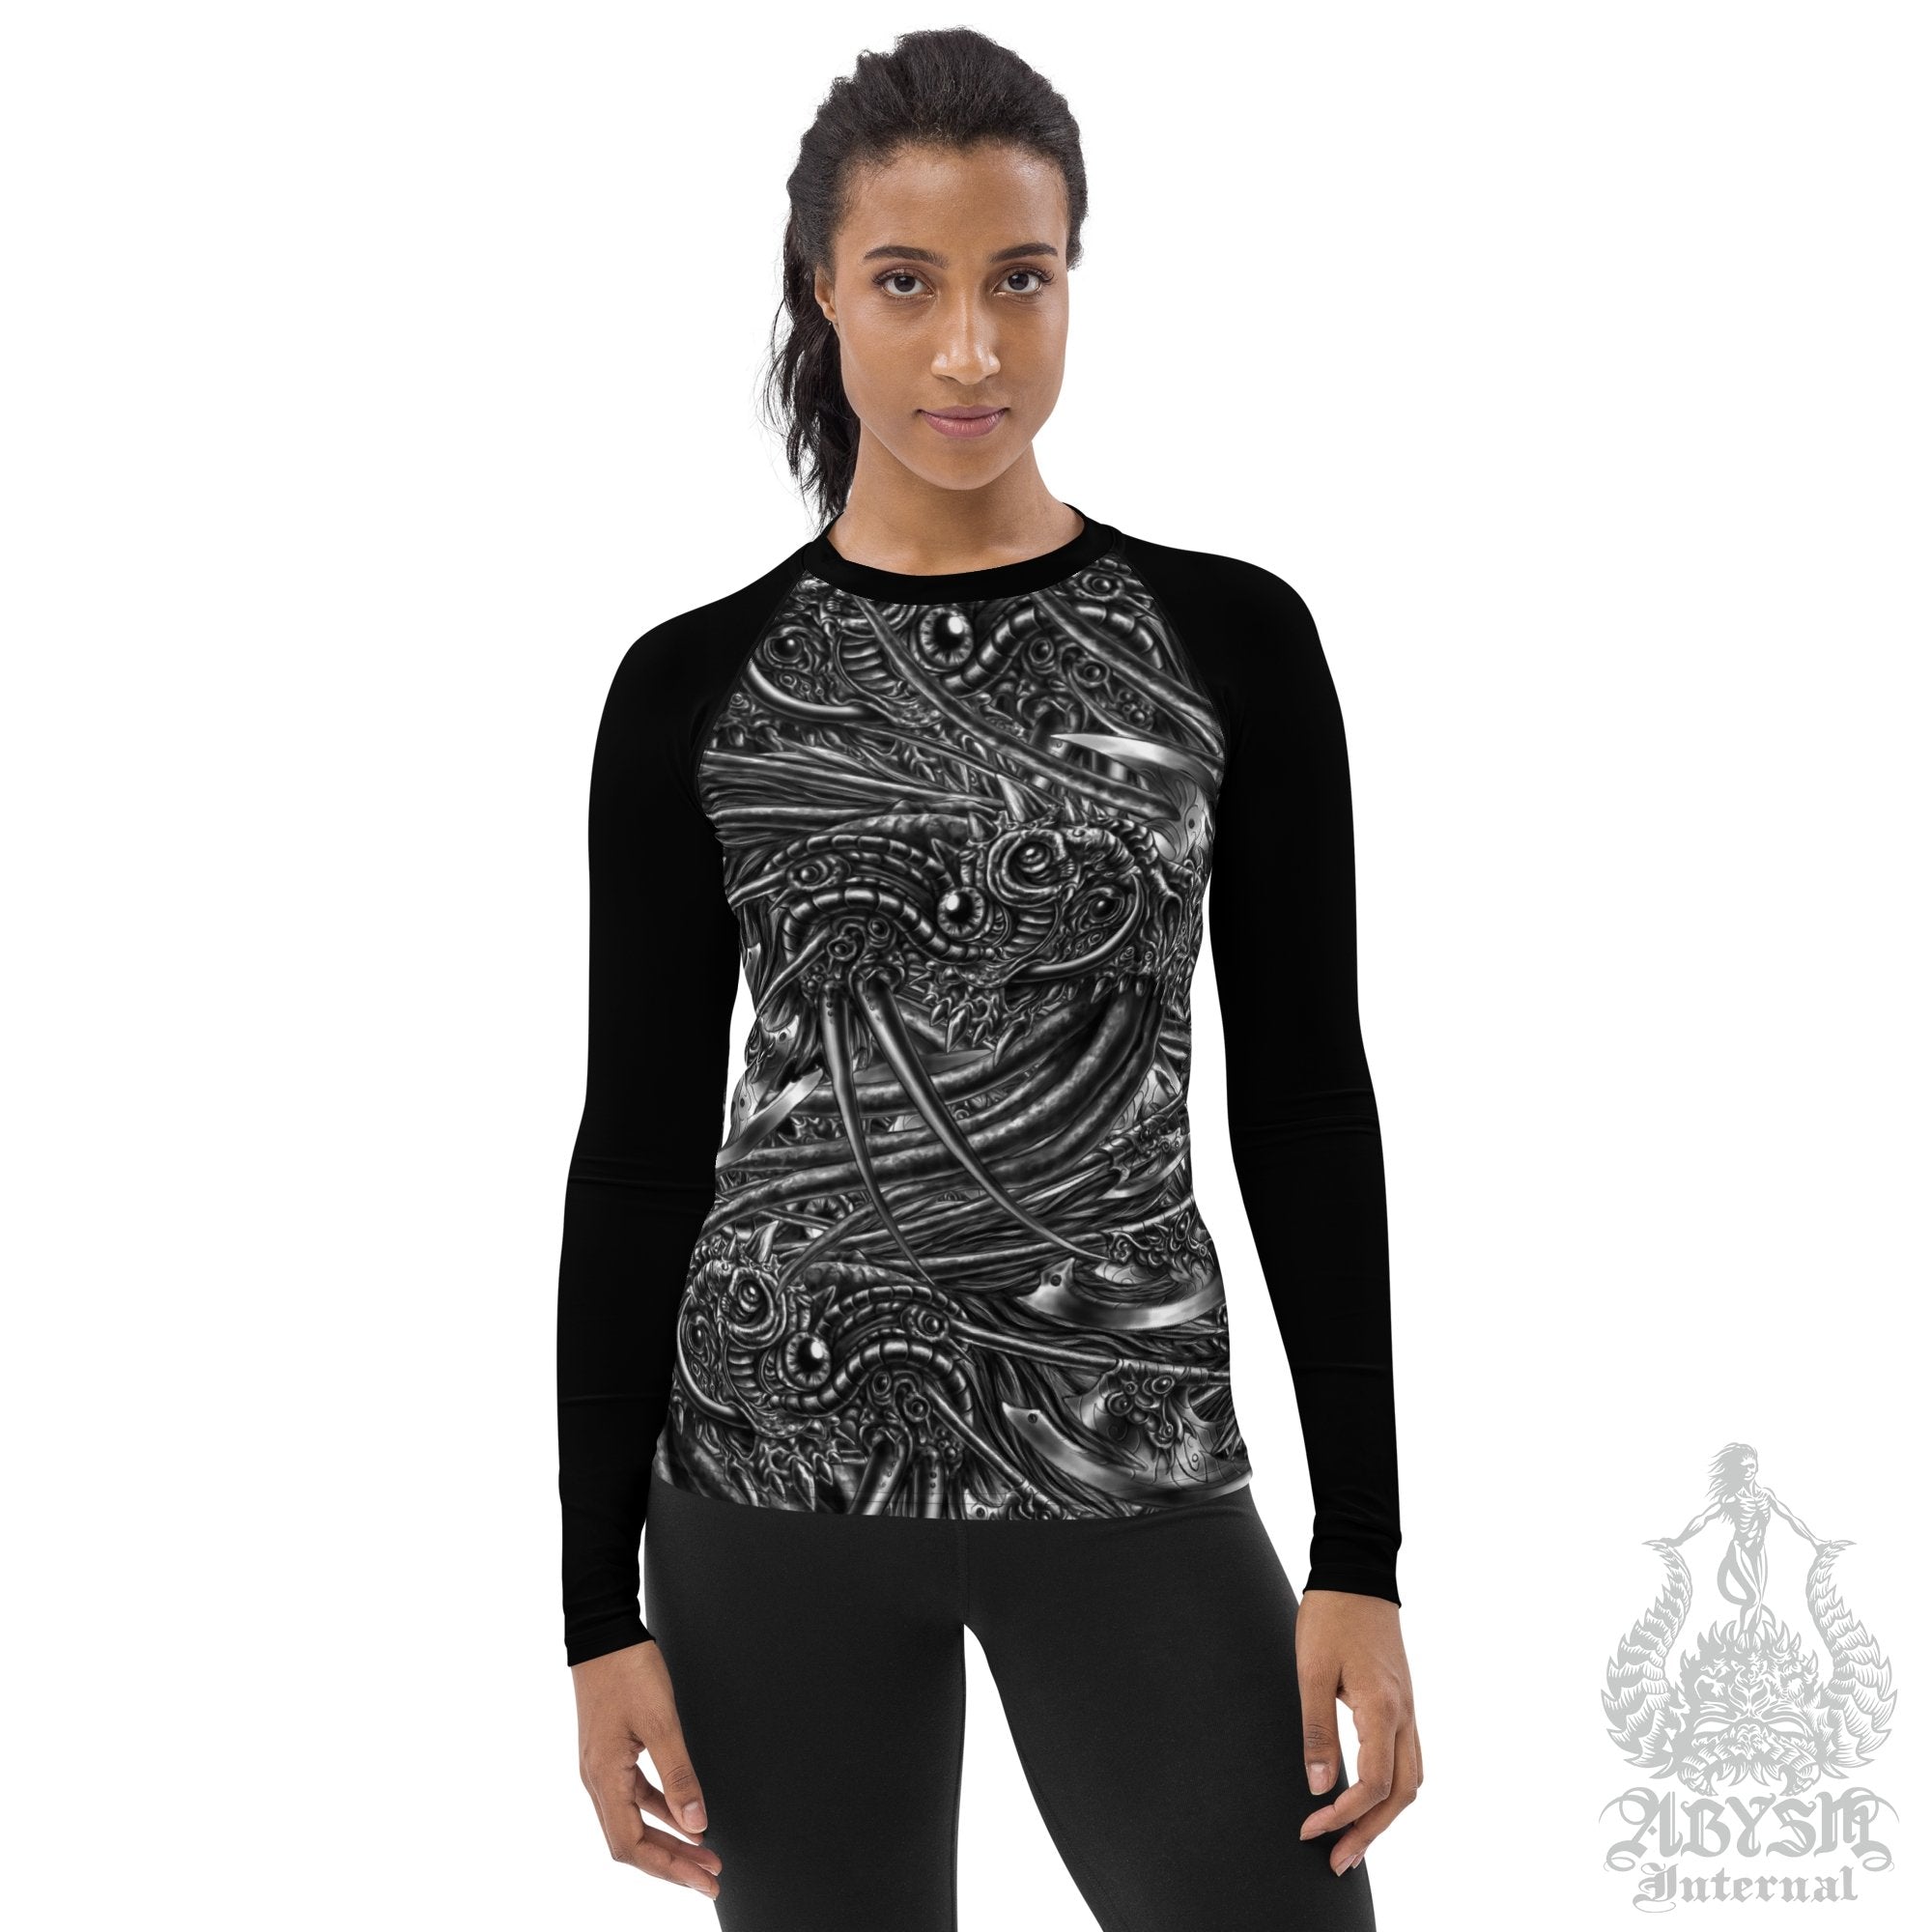 Black and White Women's Rash Guard, Long Sleeve spandex shirt for surfing, swimsuit top for water sports, Fantasy Art - Alien Monster - Abysm Internal